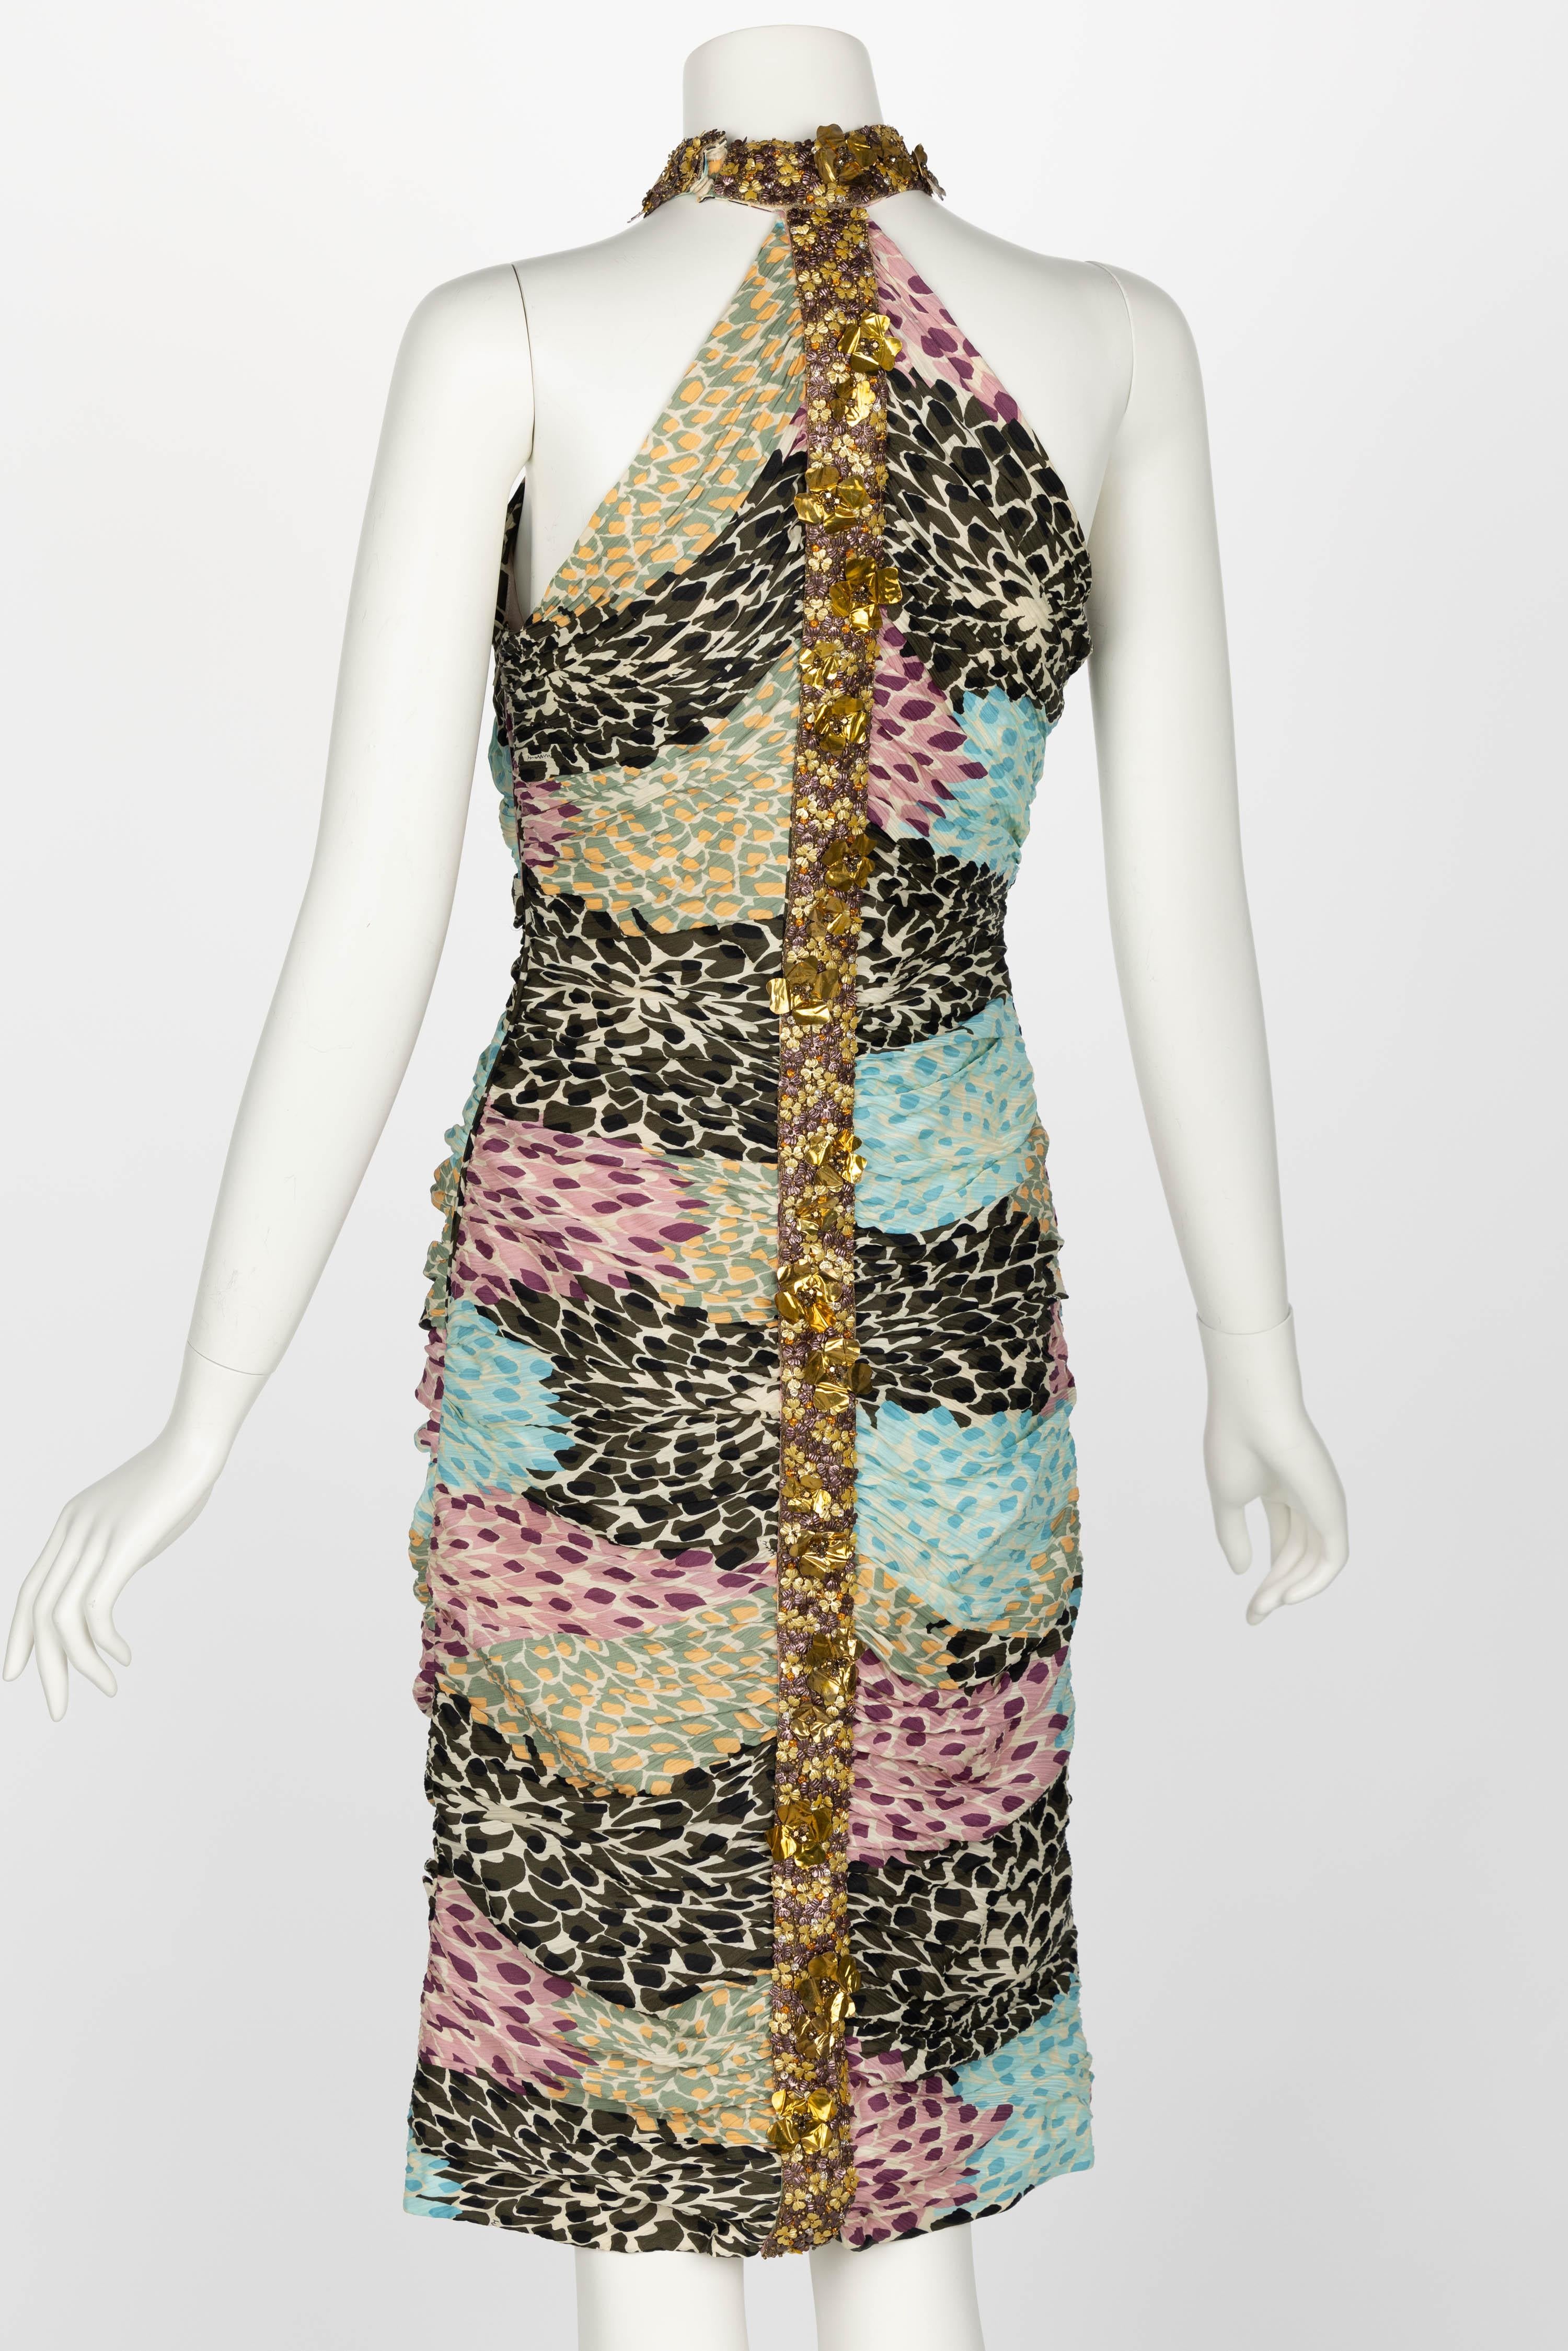 Missoni Embellished Silk Print Halter Dress F/W 2005 For Sale 1